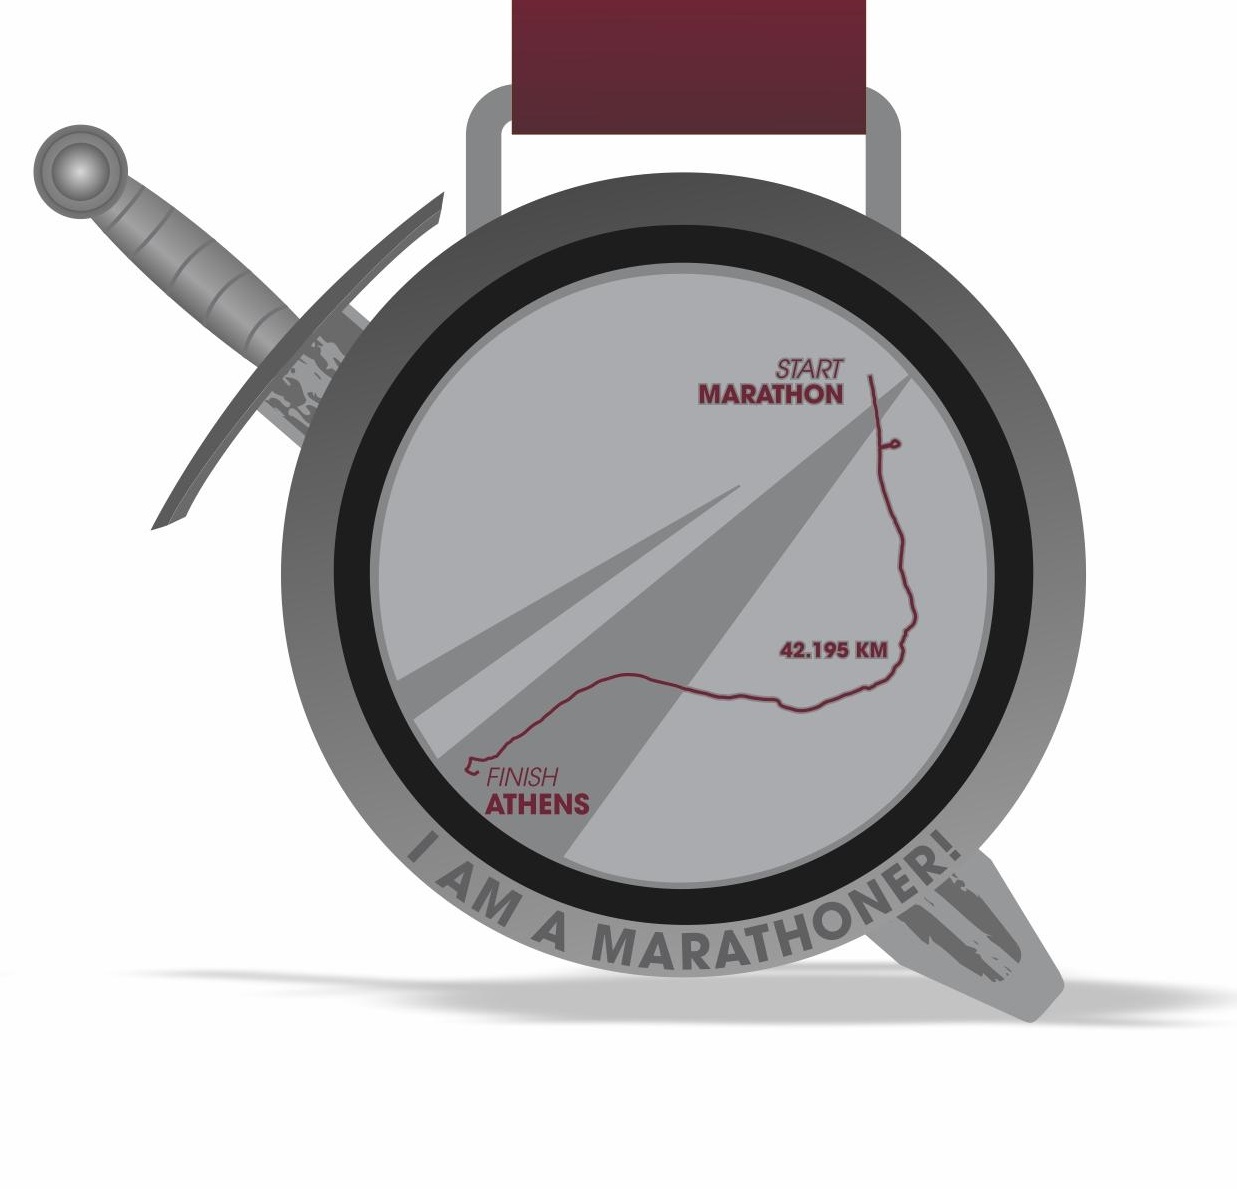 I am a Marathoner